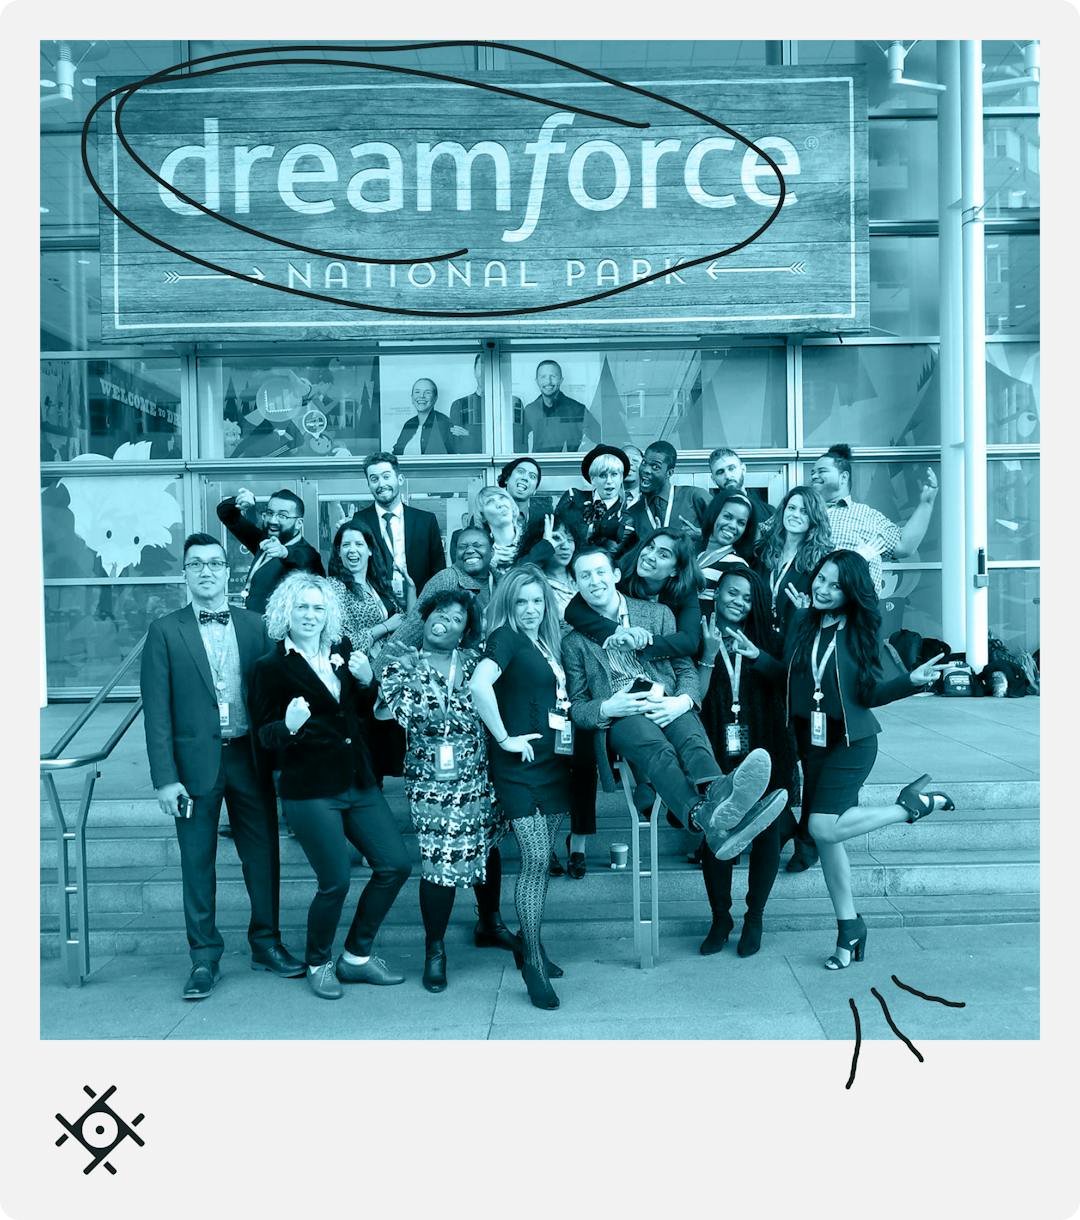 Polaroid-style photo of the Dreamforce event team